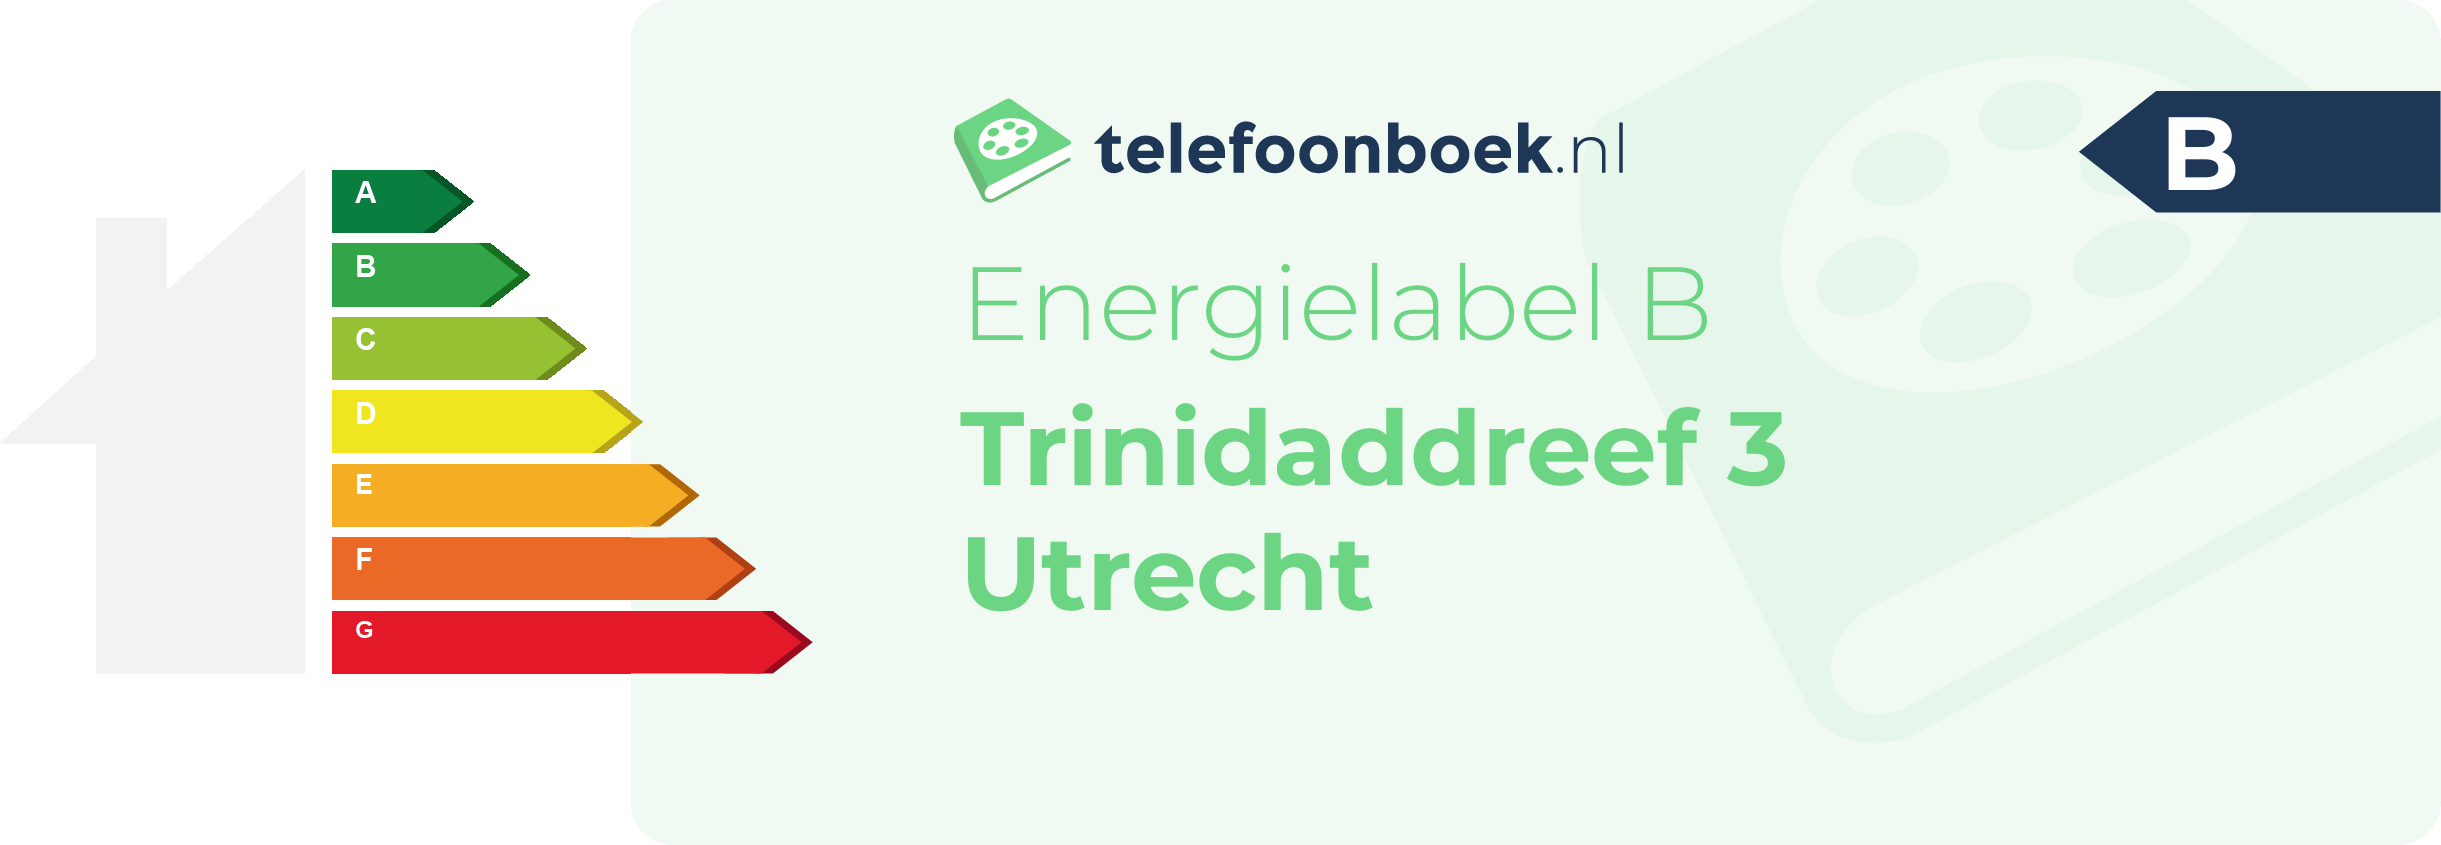 Energielabel Trinidaddreef 3 Utrecht